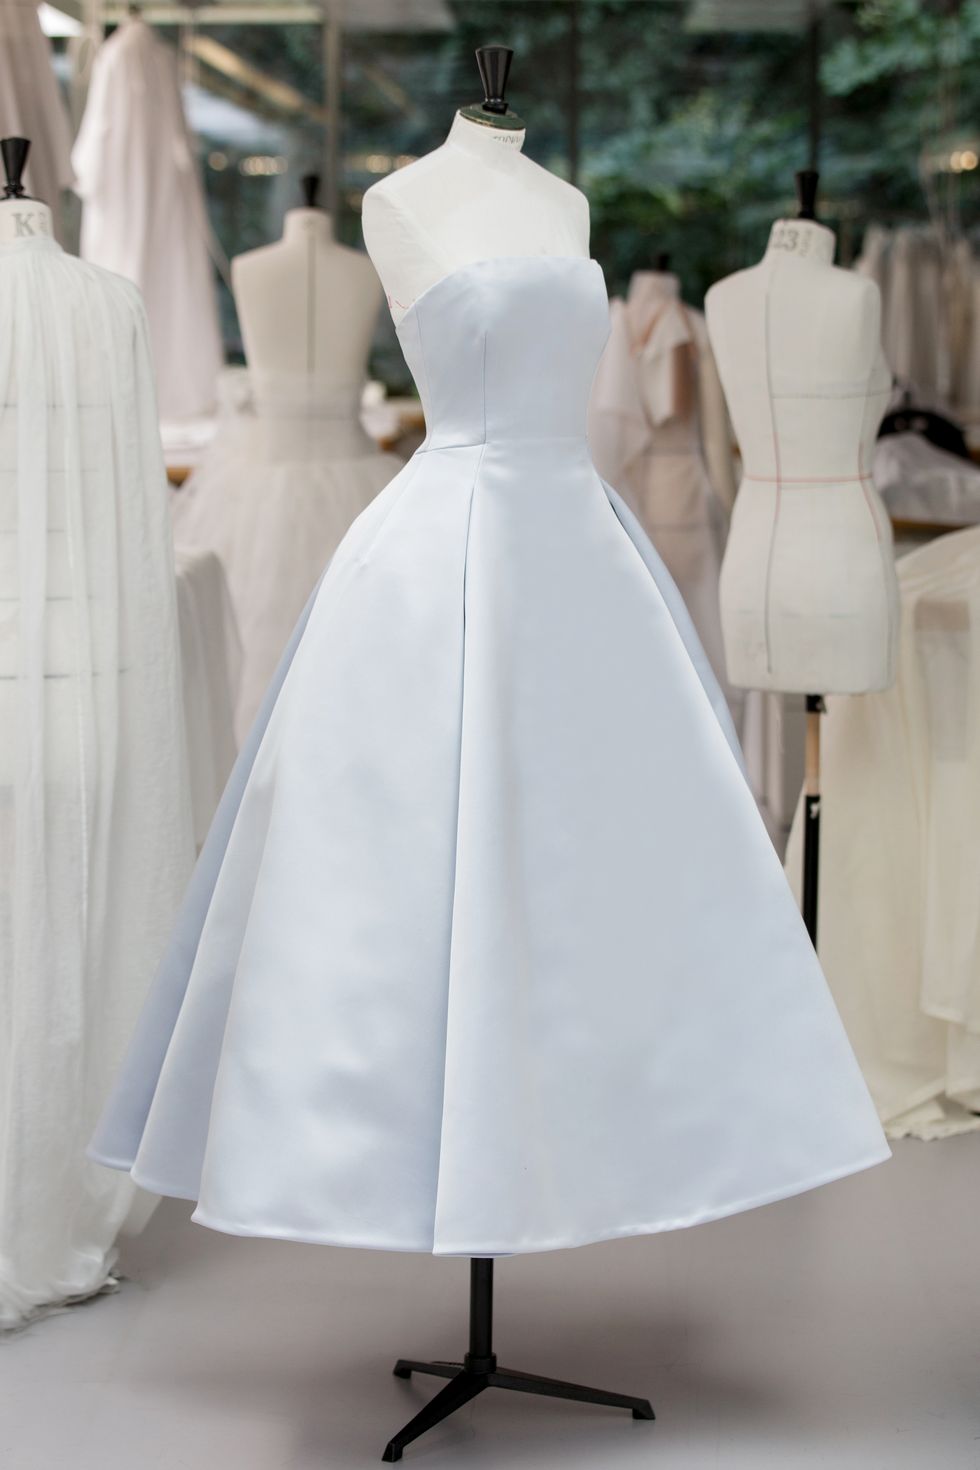 Anya Taylor-Joy Wears a Second Dior Dress at Golden Globes 2021 - See ...